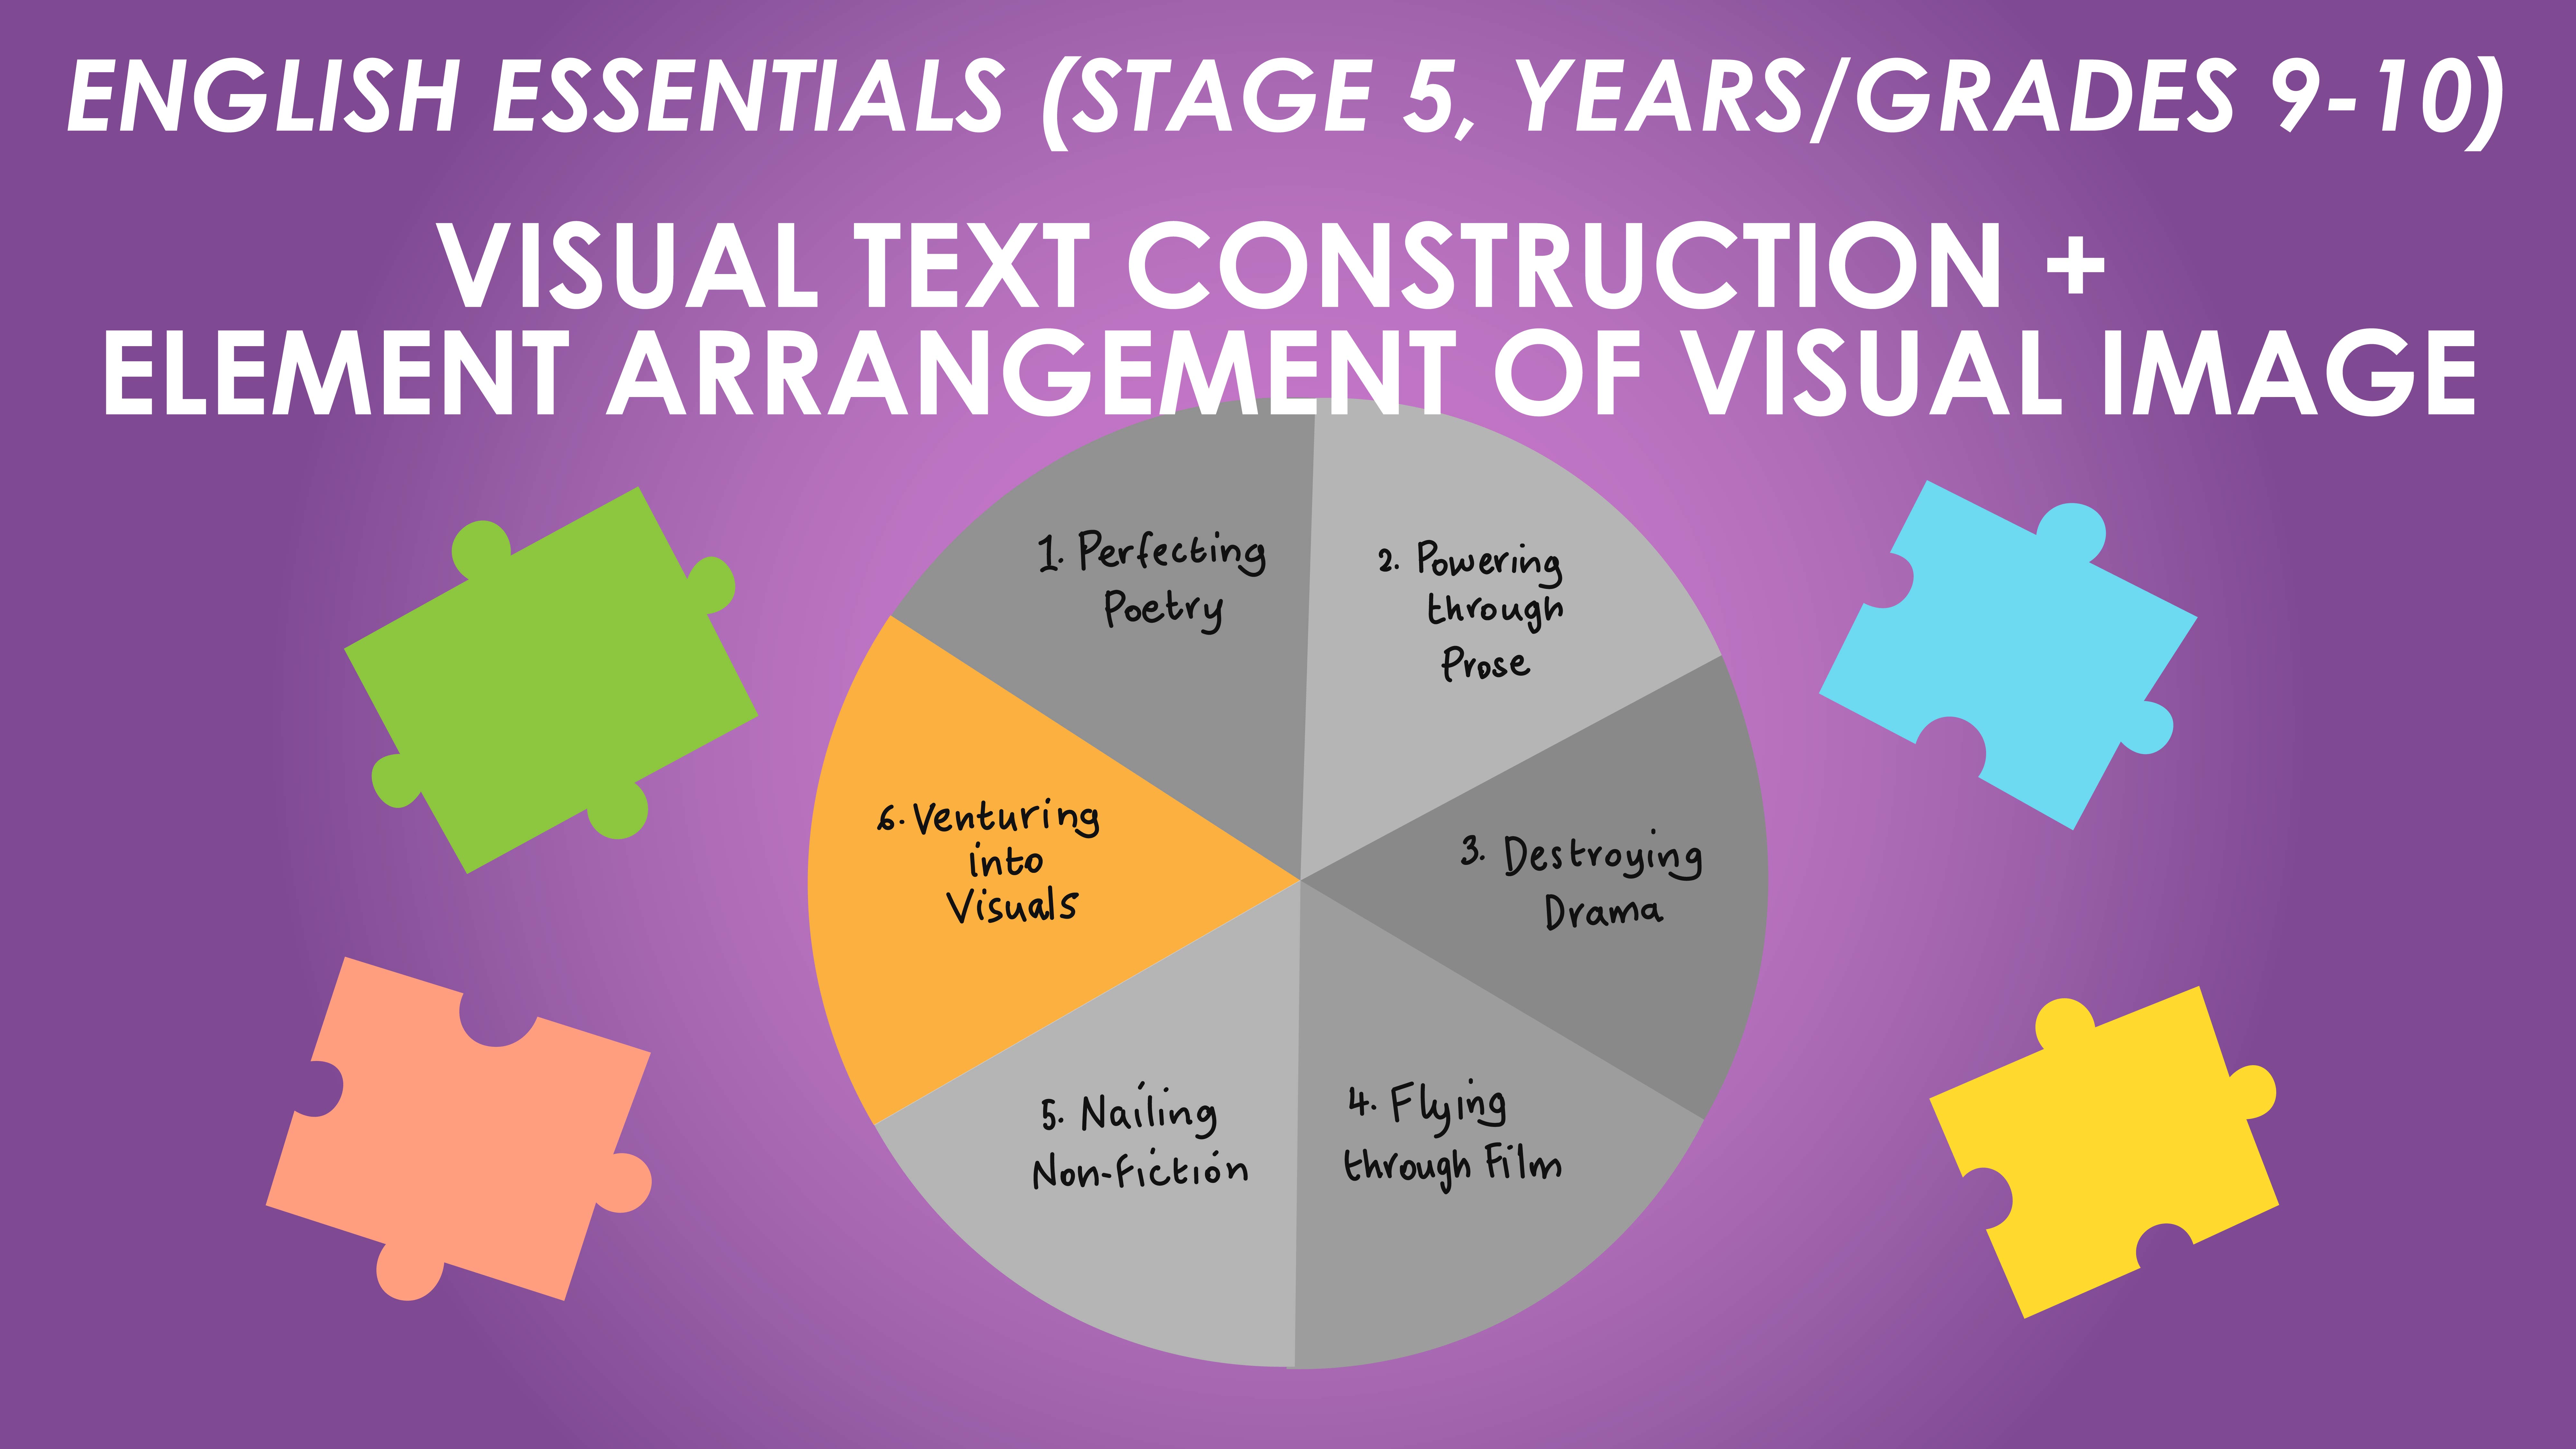 English Essentials - Venturing into Visuals - Visual Text Construction & Element Arrangement (Stage 5, Years/Grades 9-10)